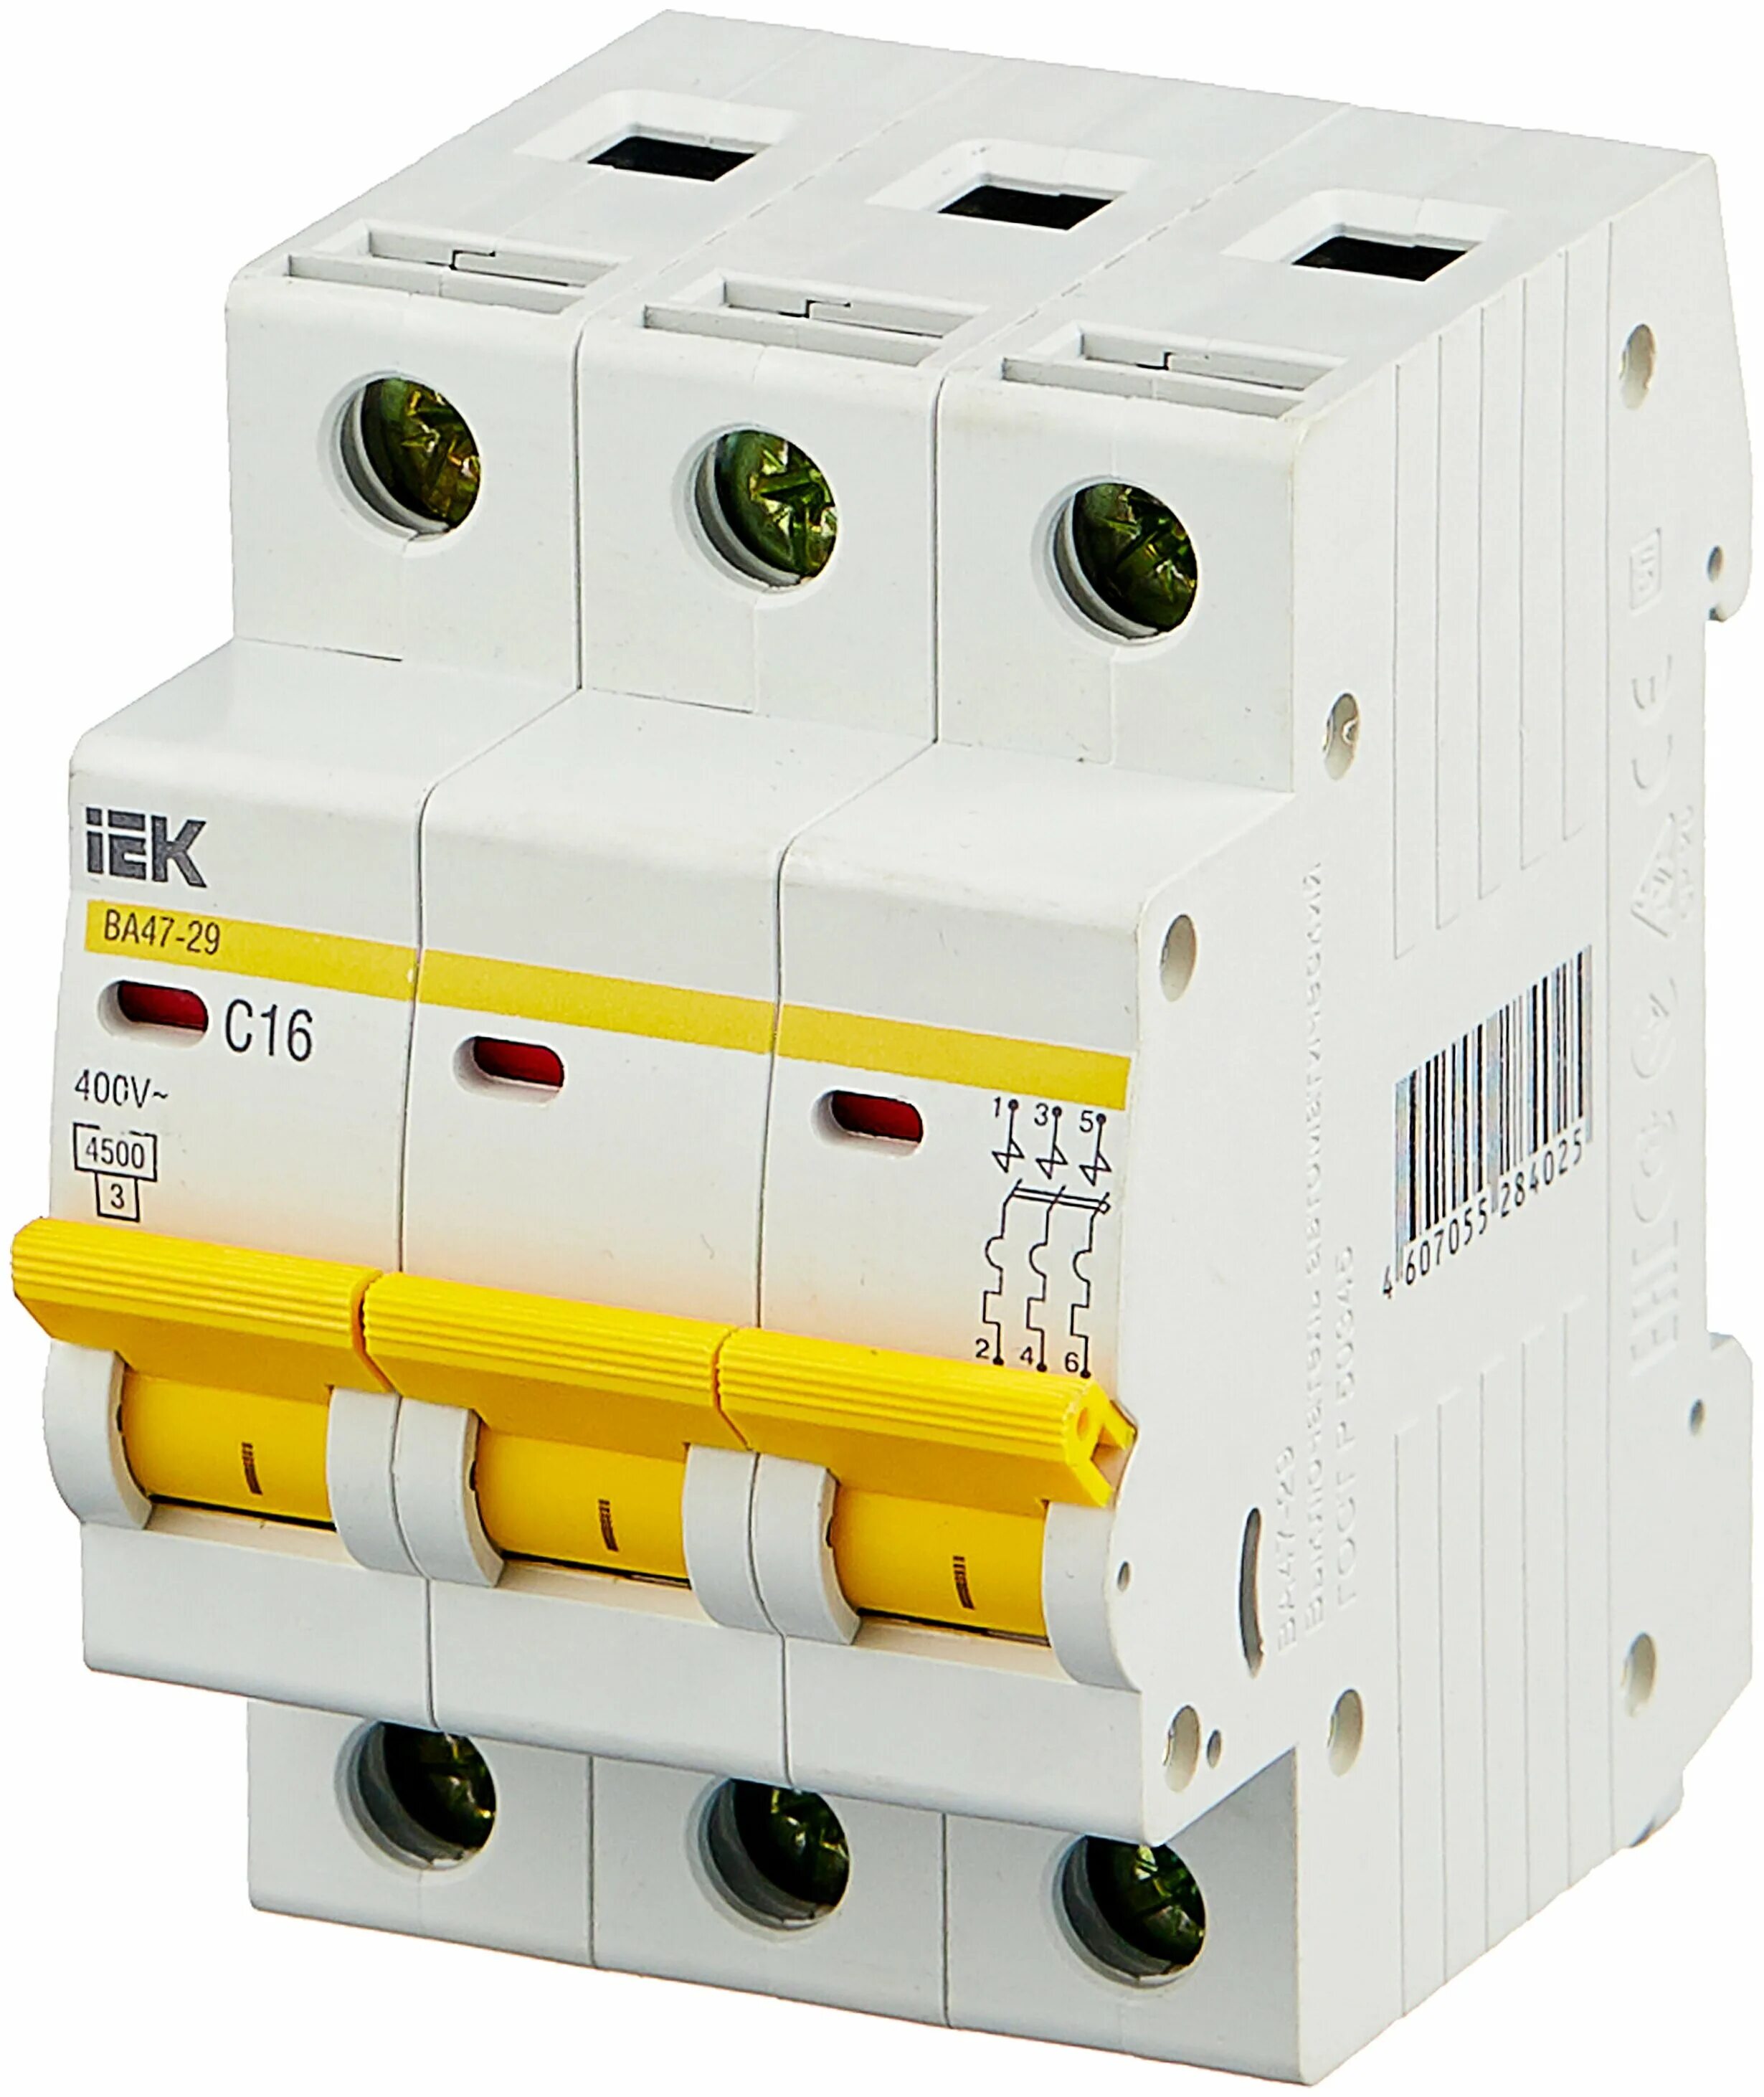 Автоматический выключатель 16а IEK. Автоматический выключатель IEK ва47-29 3p. Автоматический выключатель IEK ва 47-29 3p (c) 4,5ka 50 а. Автоматический выключатель IEK ва 47-29 3п. Автомат трехфазный 16а